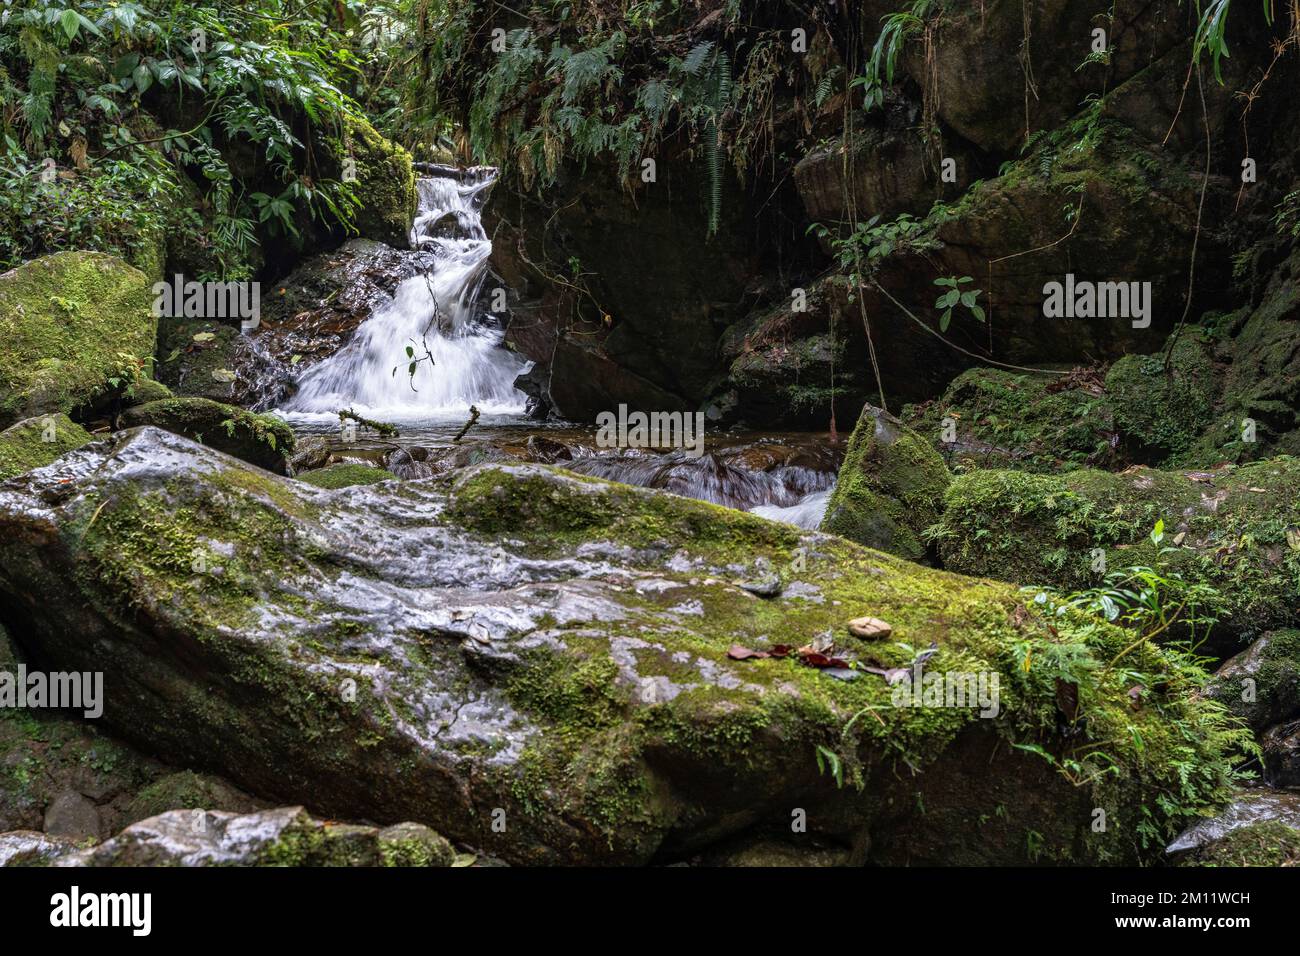 South America, Colombia, Departamento de Antioquia, Medellín, Envigado, Picturesque forest scene in Quebrada la Miel Stock Photo